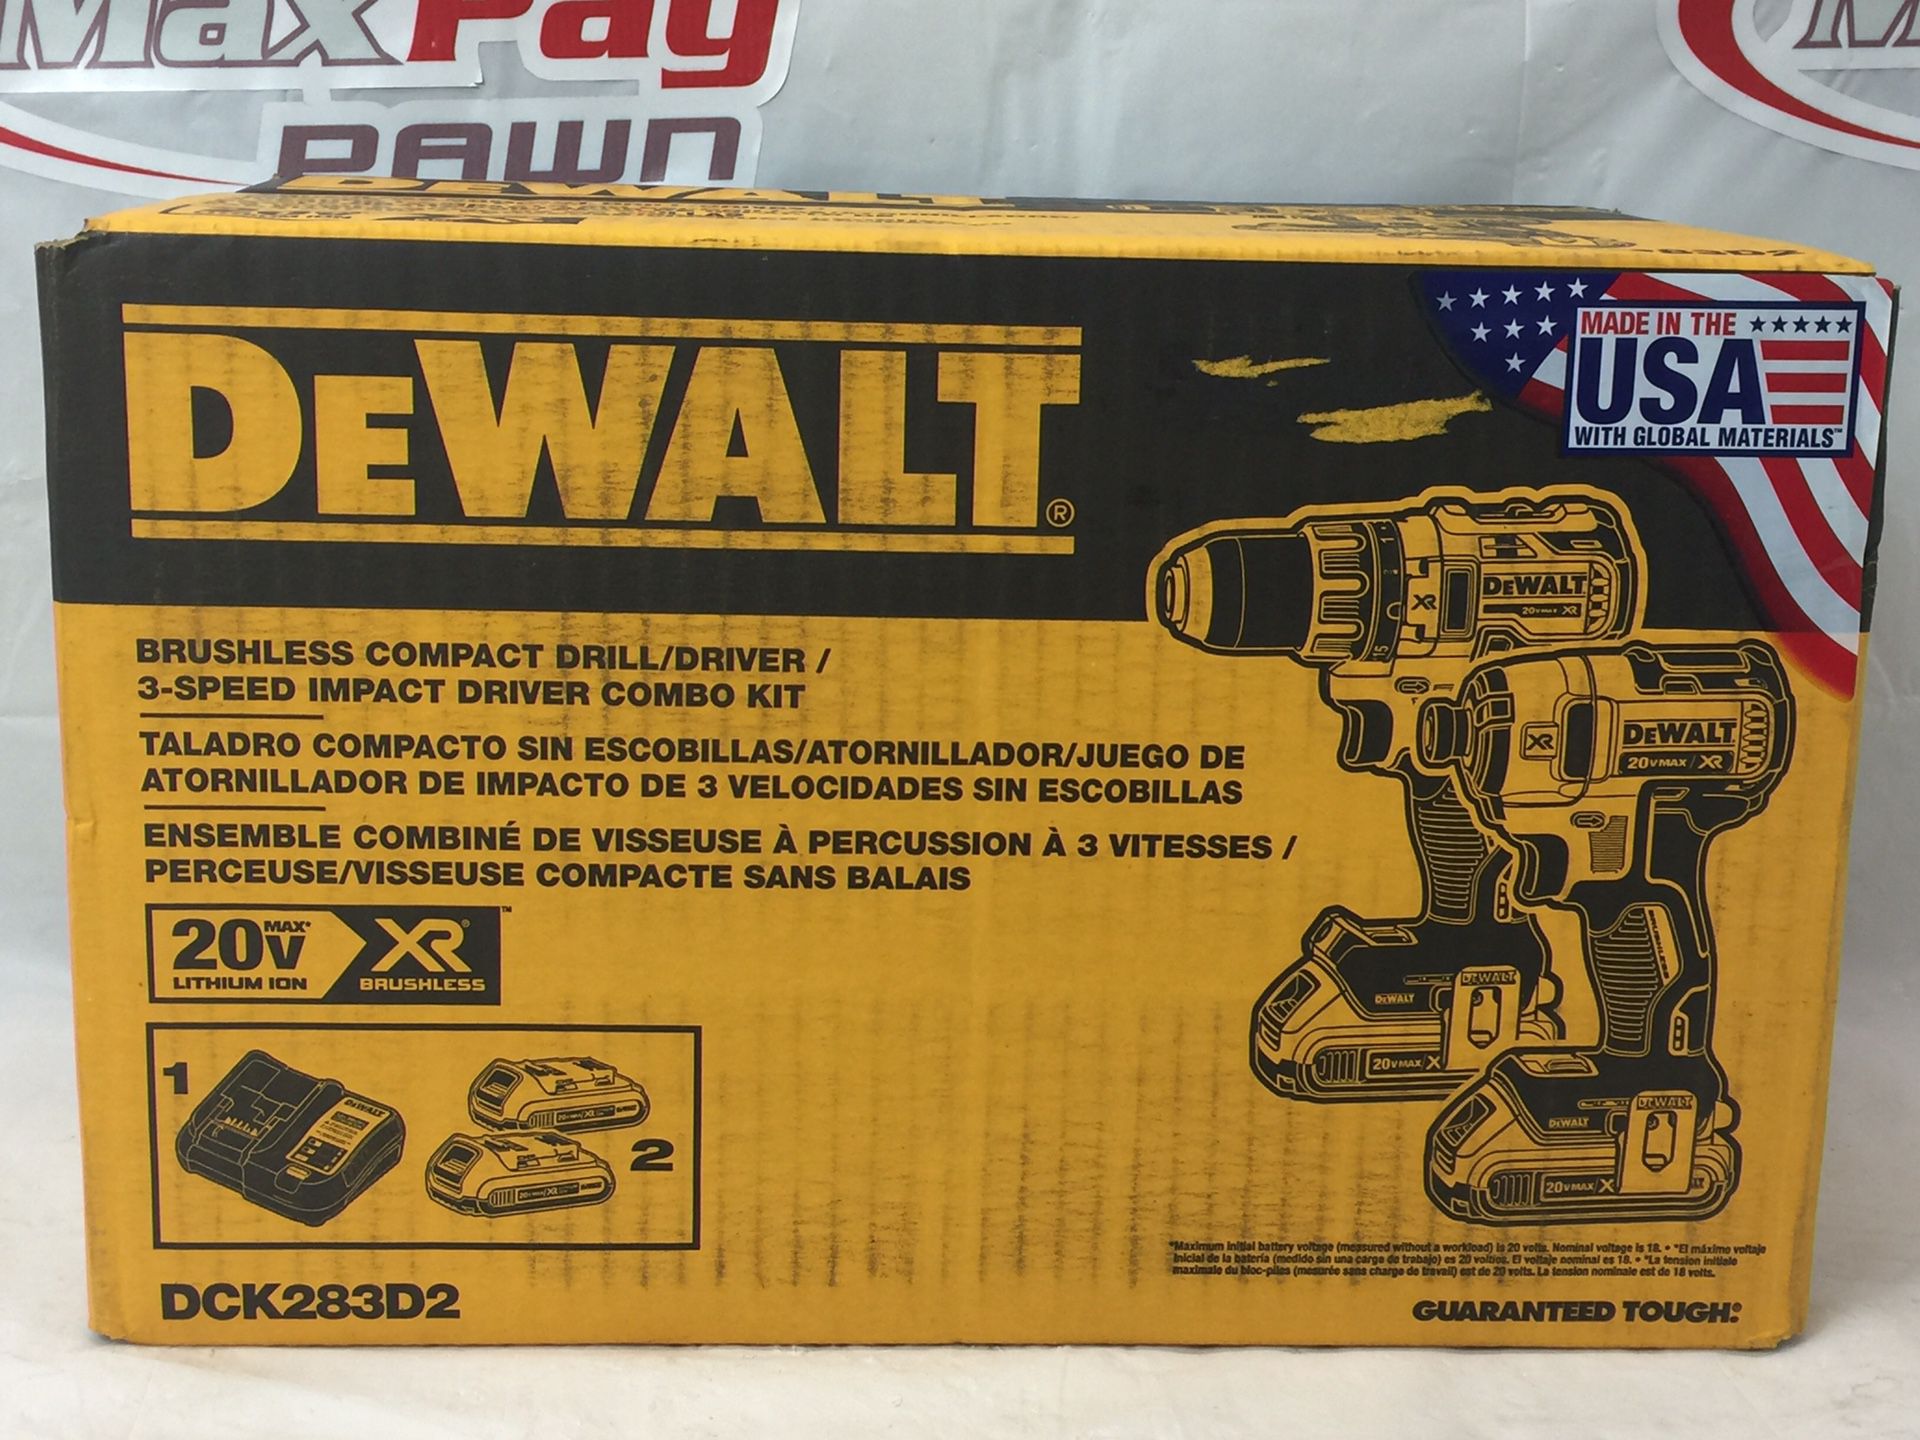 Dewalt (DCK283D2) 20v XR Brushless Compact Drill/Driver Kit (MXP013162)